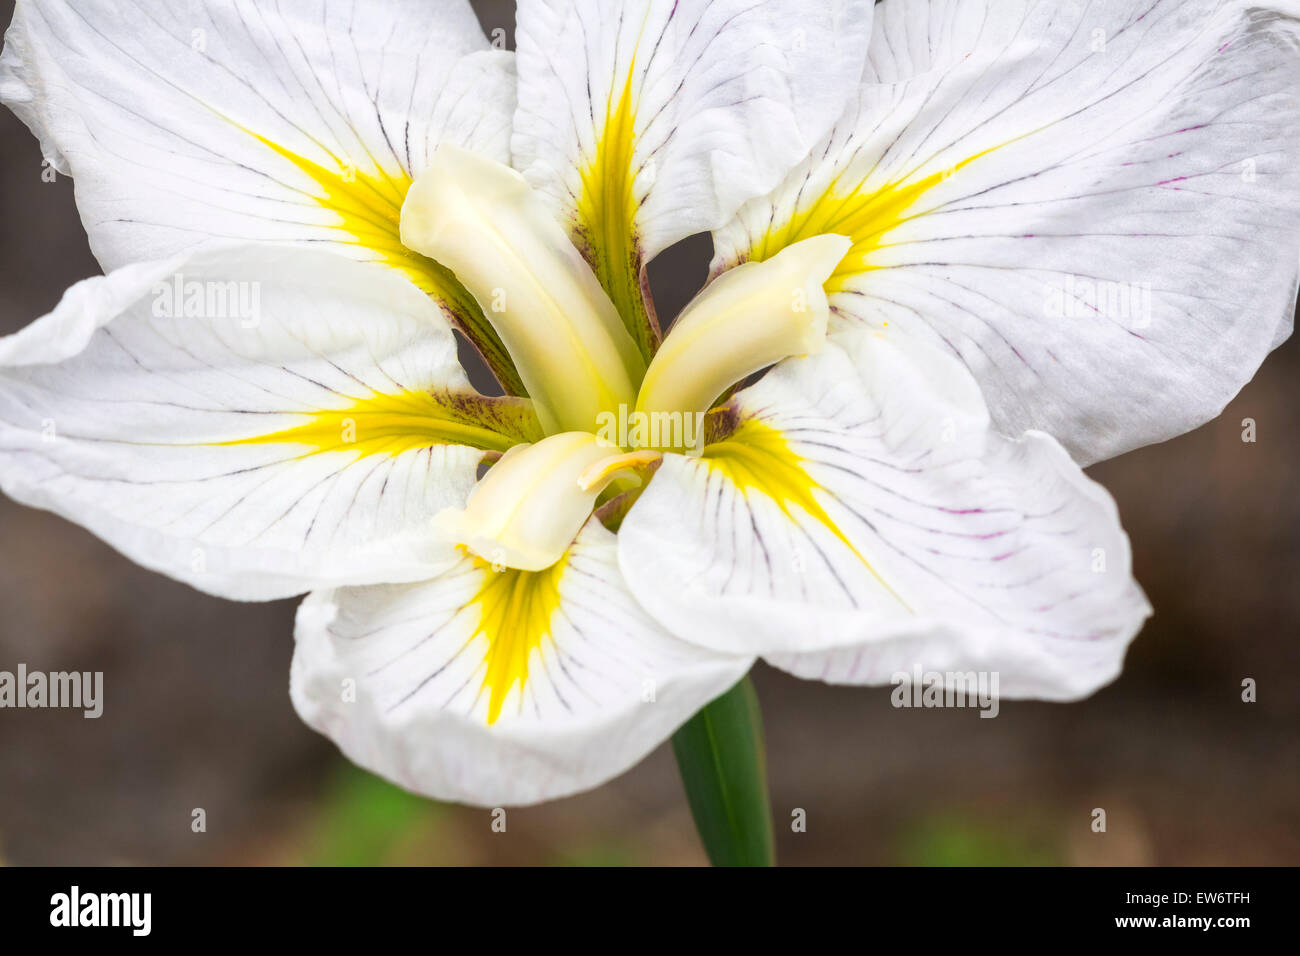 White Japanese iris with striking yellow designs on the petals Stock Photo